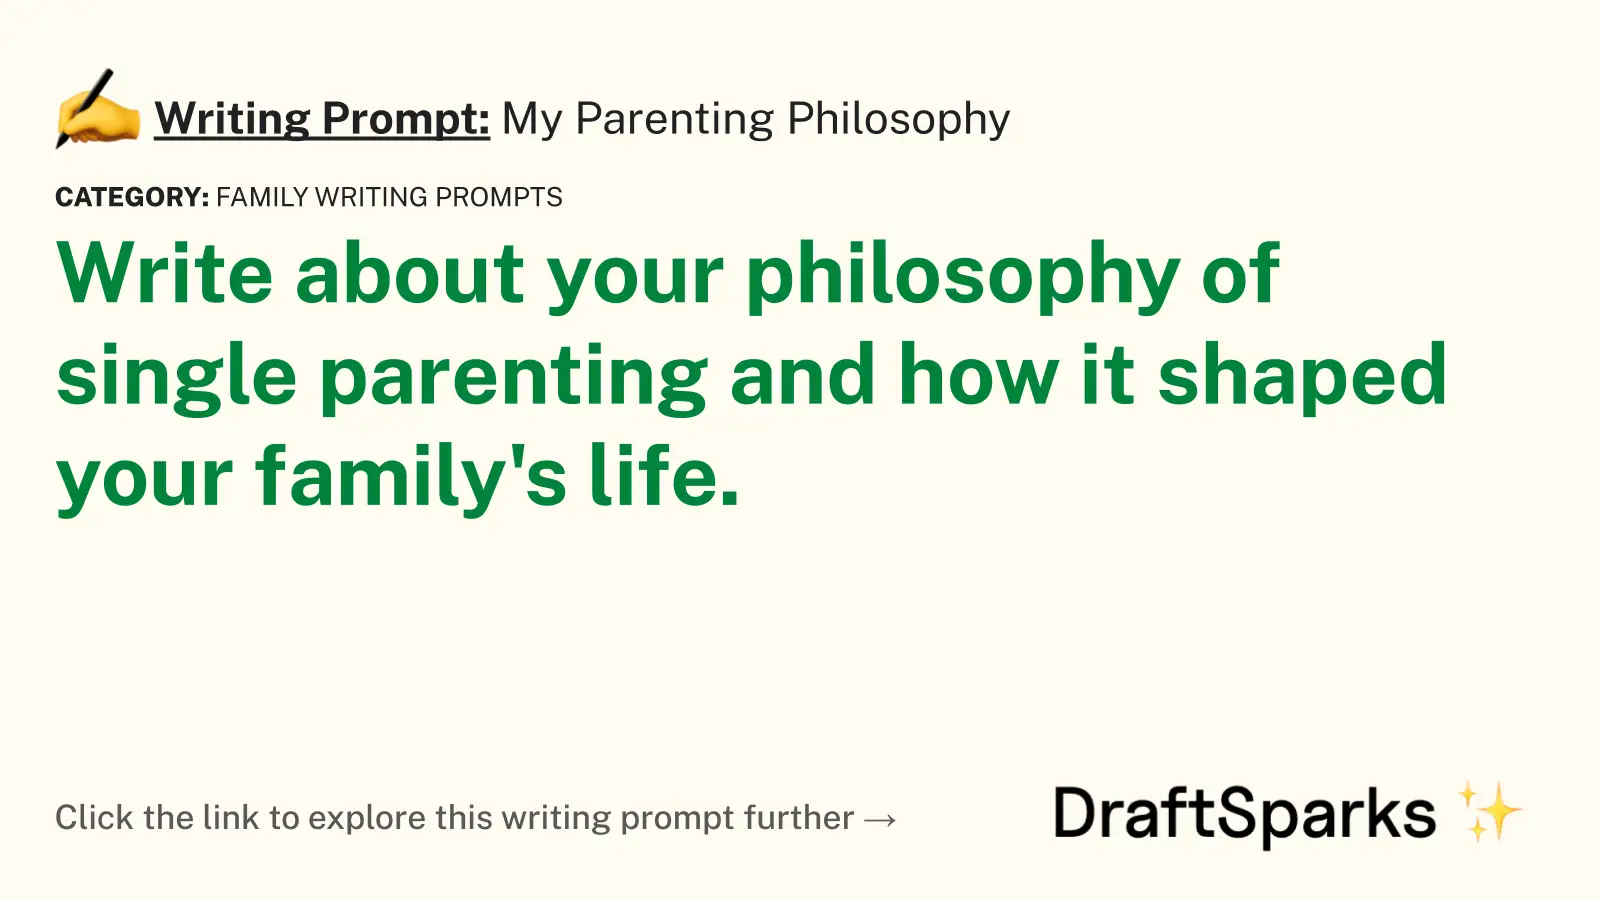 My Parenting Philosophy